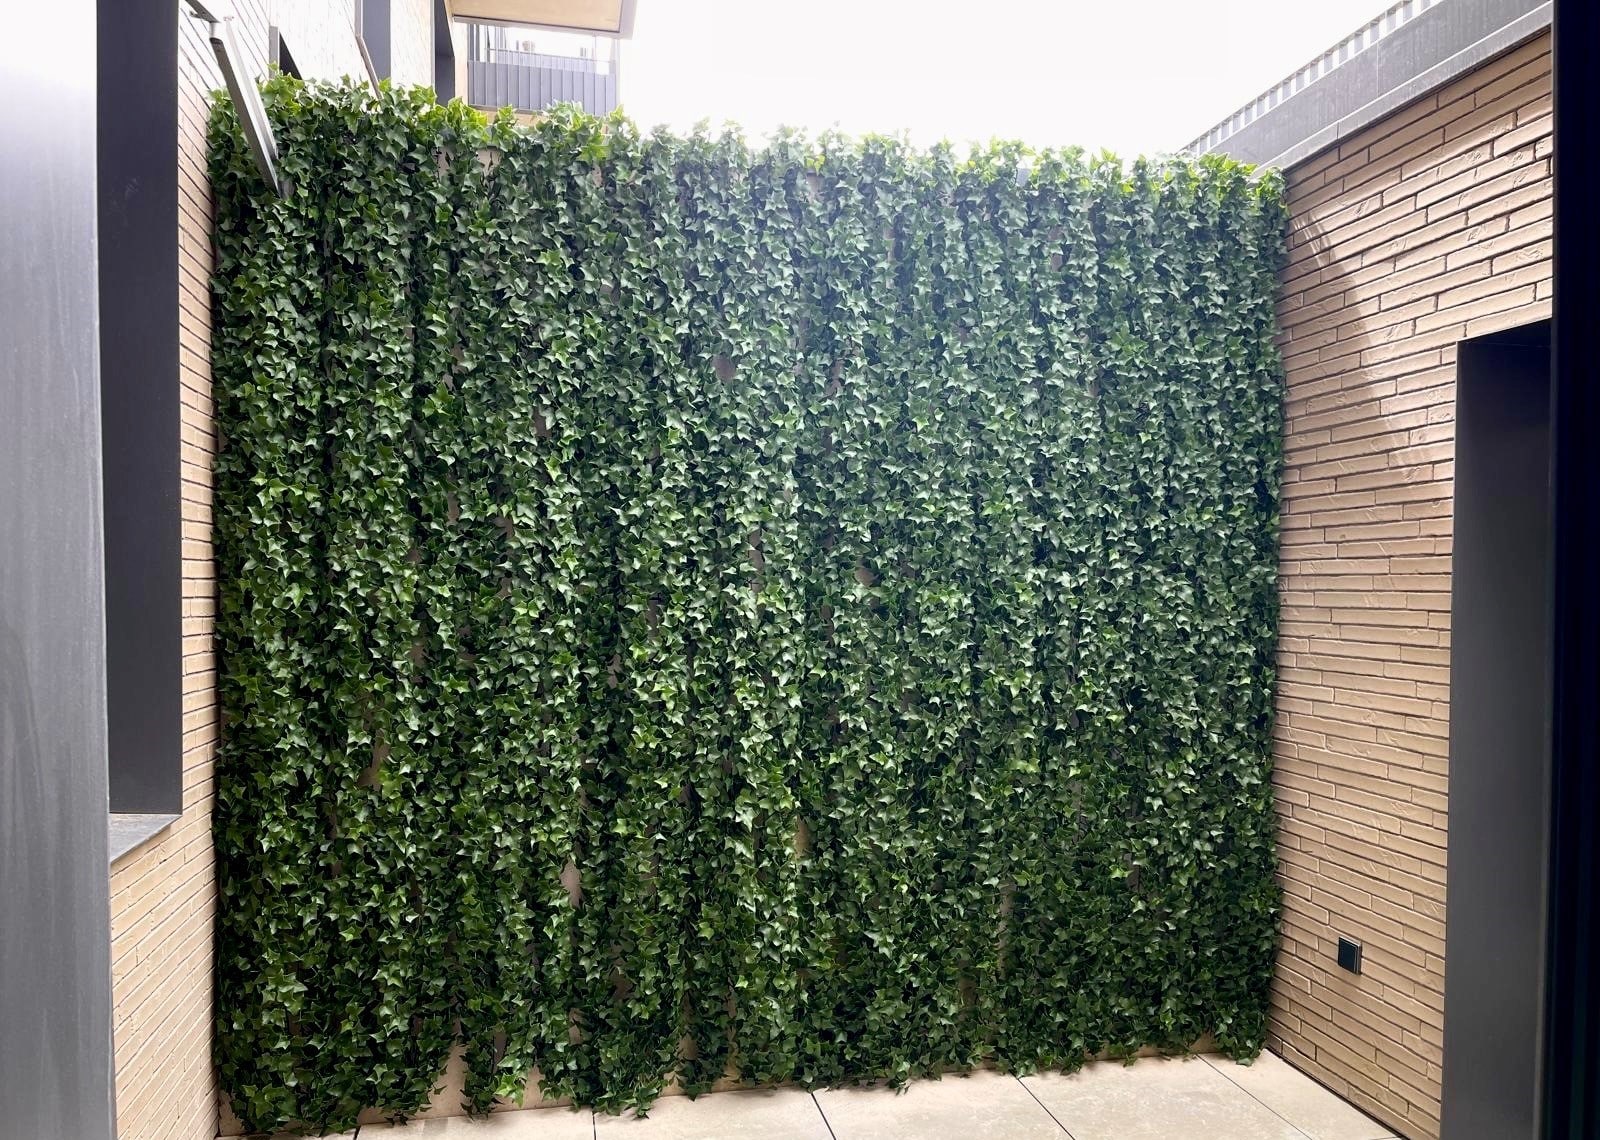 Mur végétal artificiel extérieur.jpg